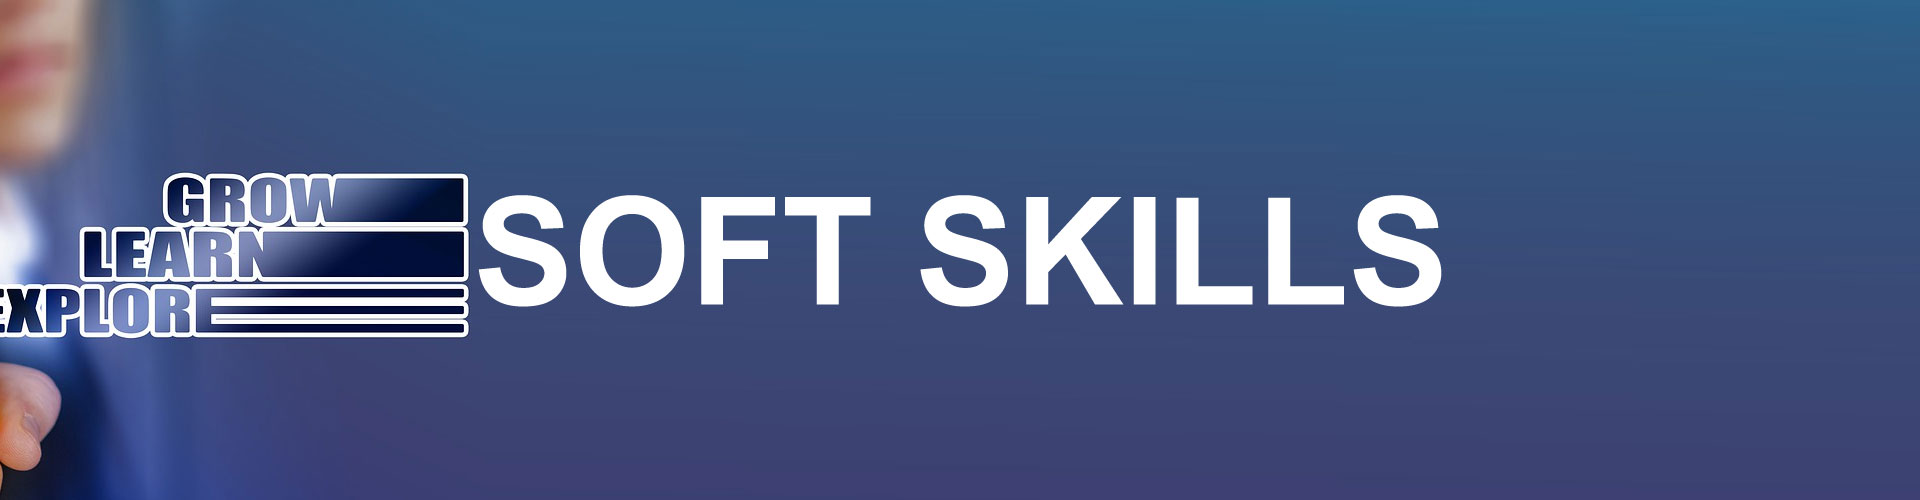 Soft Skills Training Banner